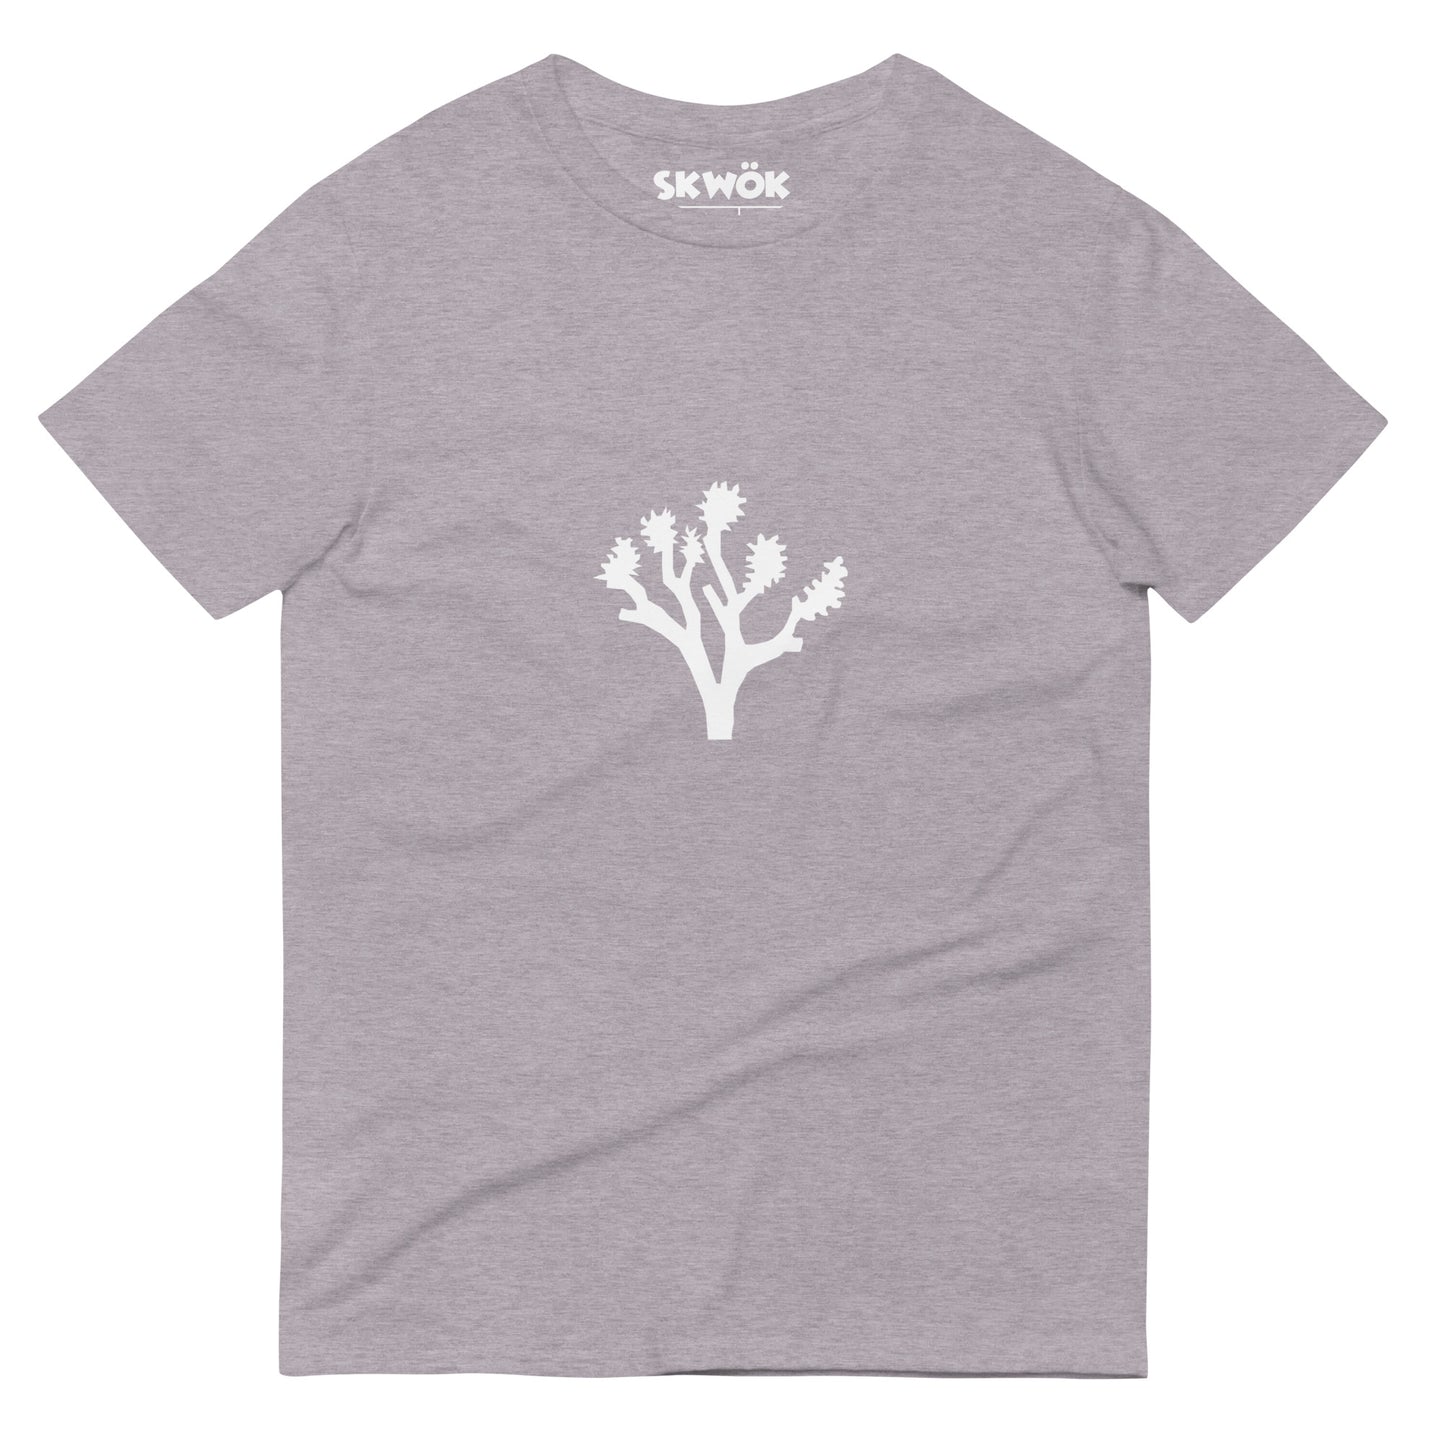 Skwok Brand / T-shirt / Joshua Tree Collection